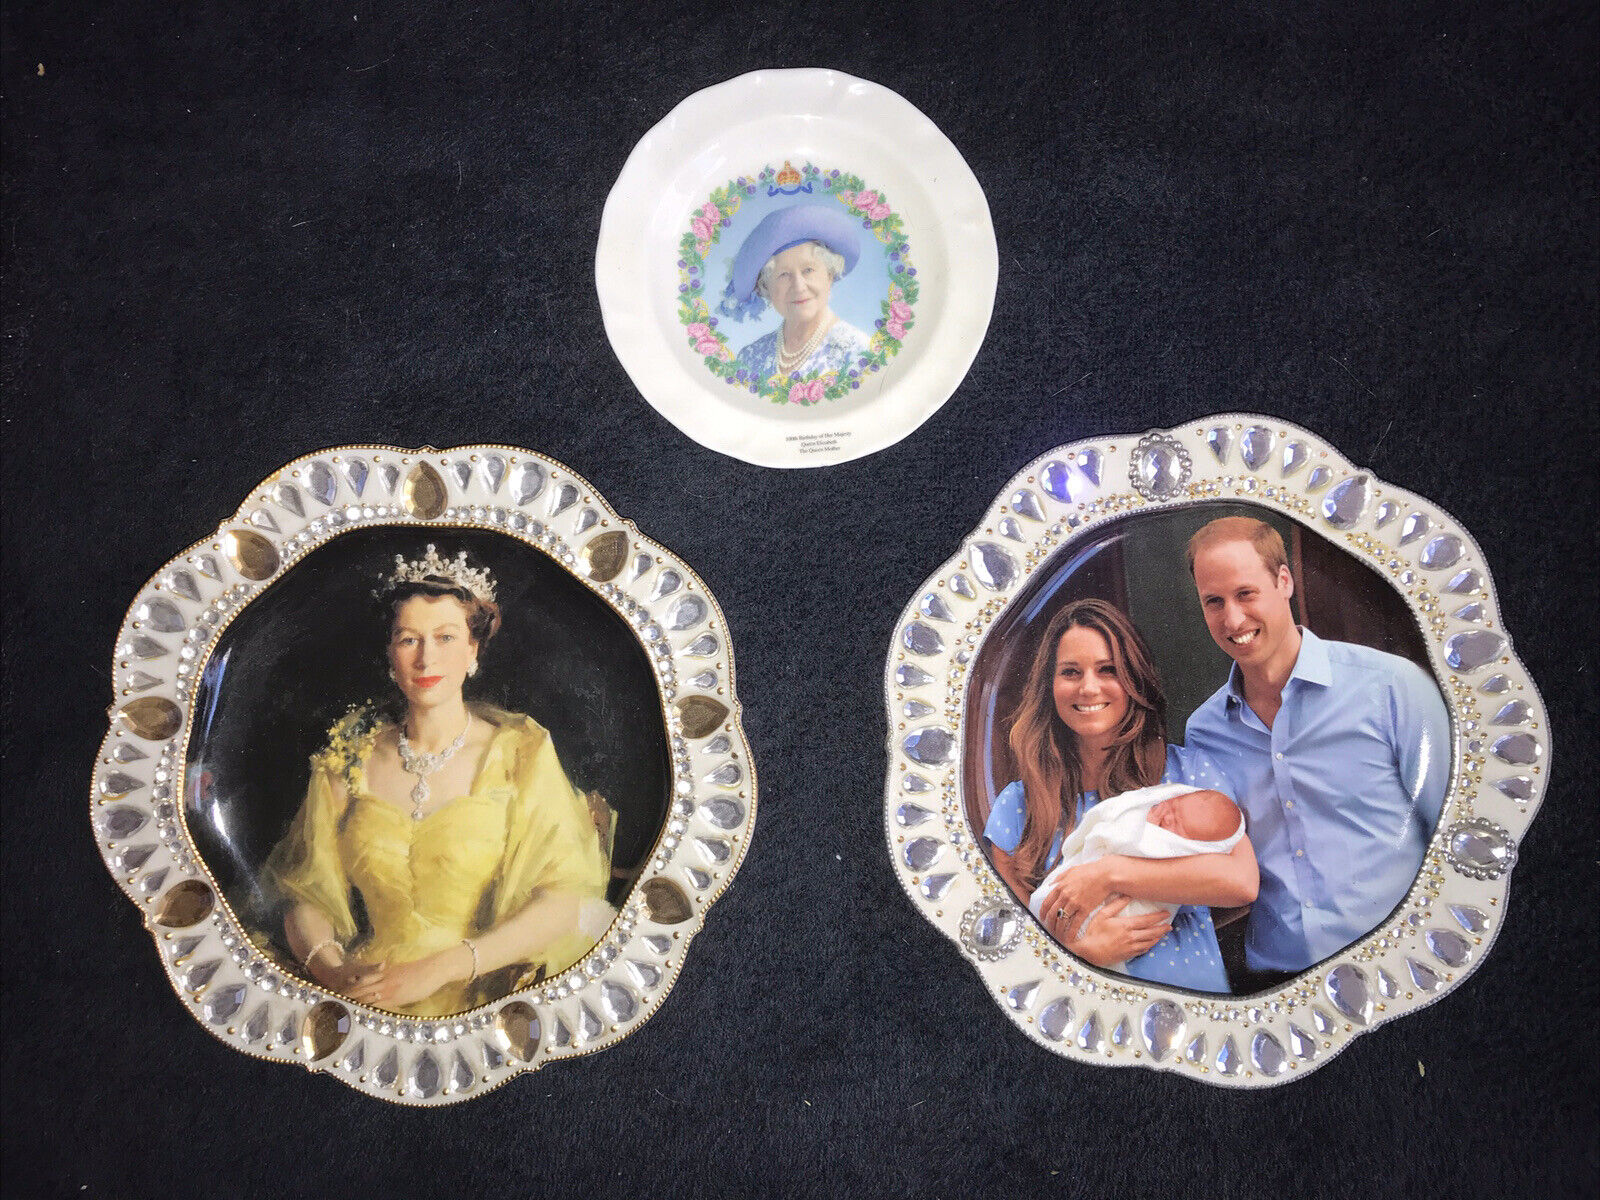 Lot Of 3 Royal Family Plates W/Queen Elizabeth II heirloom porcelain  jewel